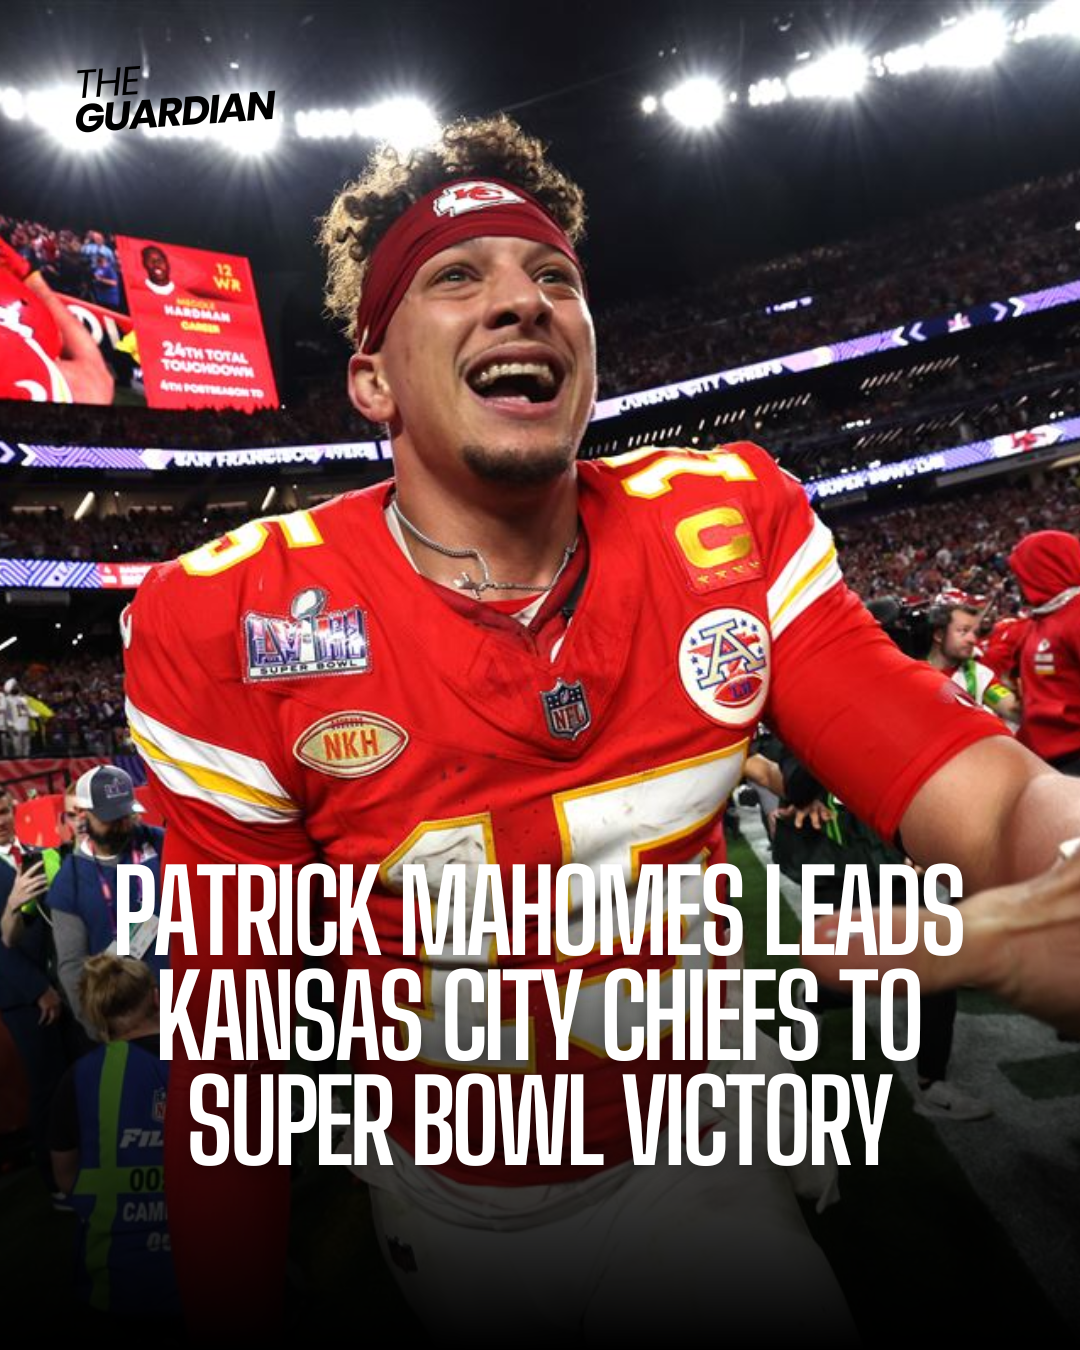 Patrick Mahomes, the Kansas City quarterback, won his third Super Bowl Most Valuable Player award on Sunday.